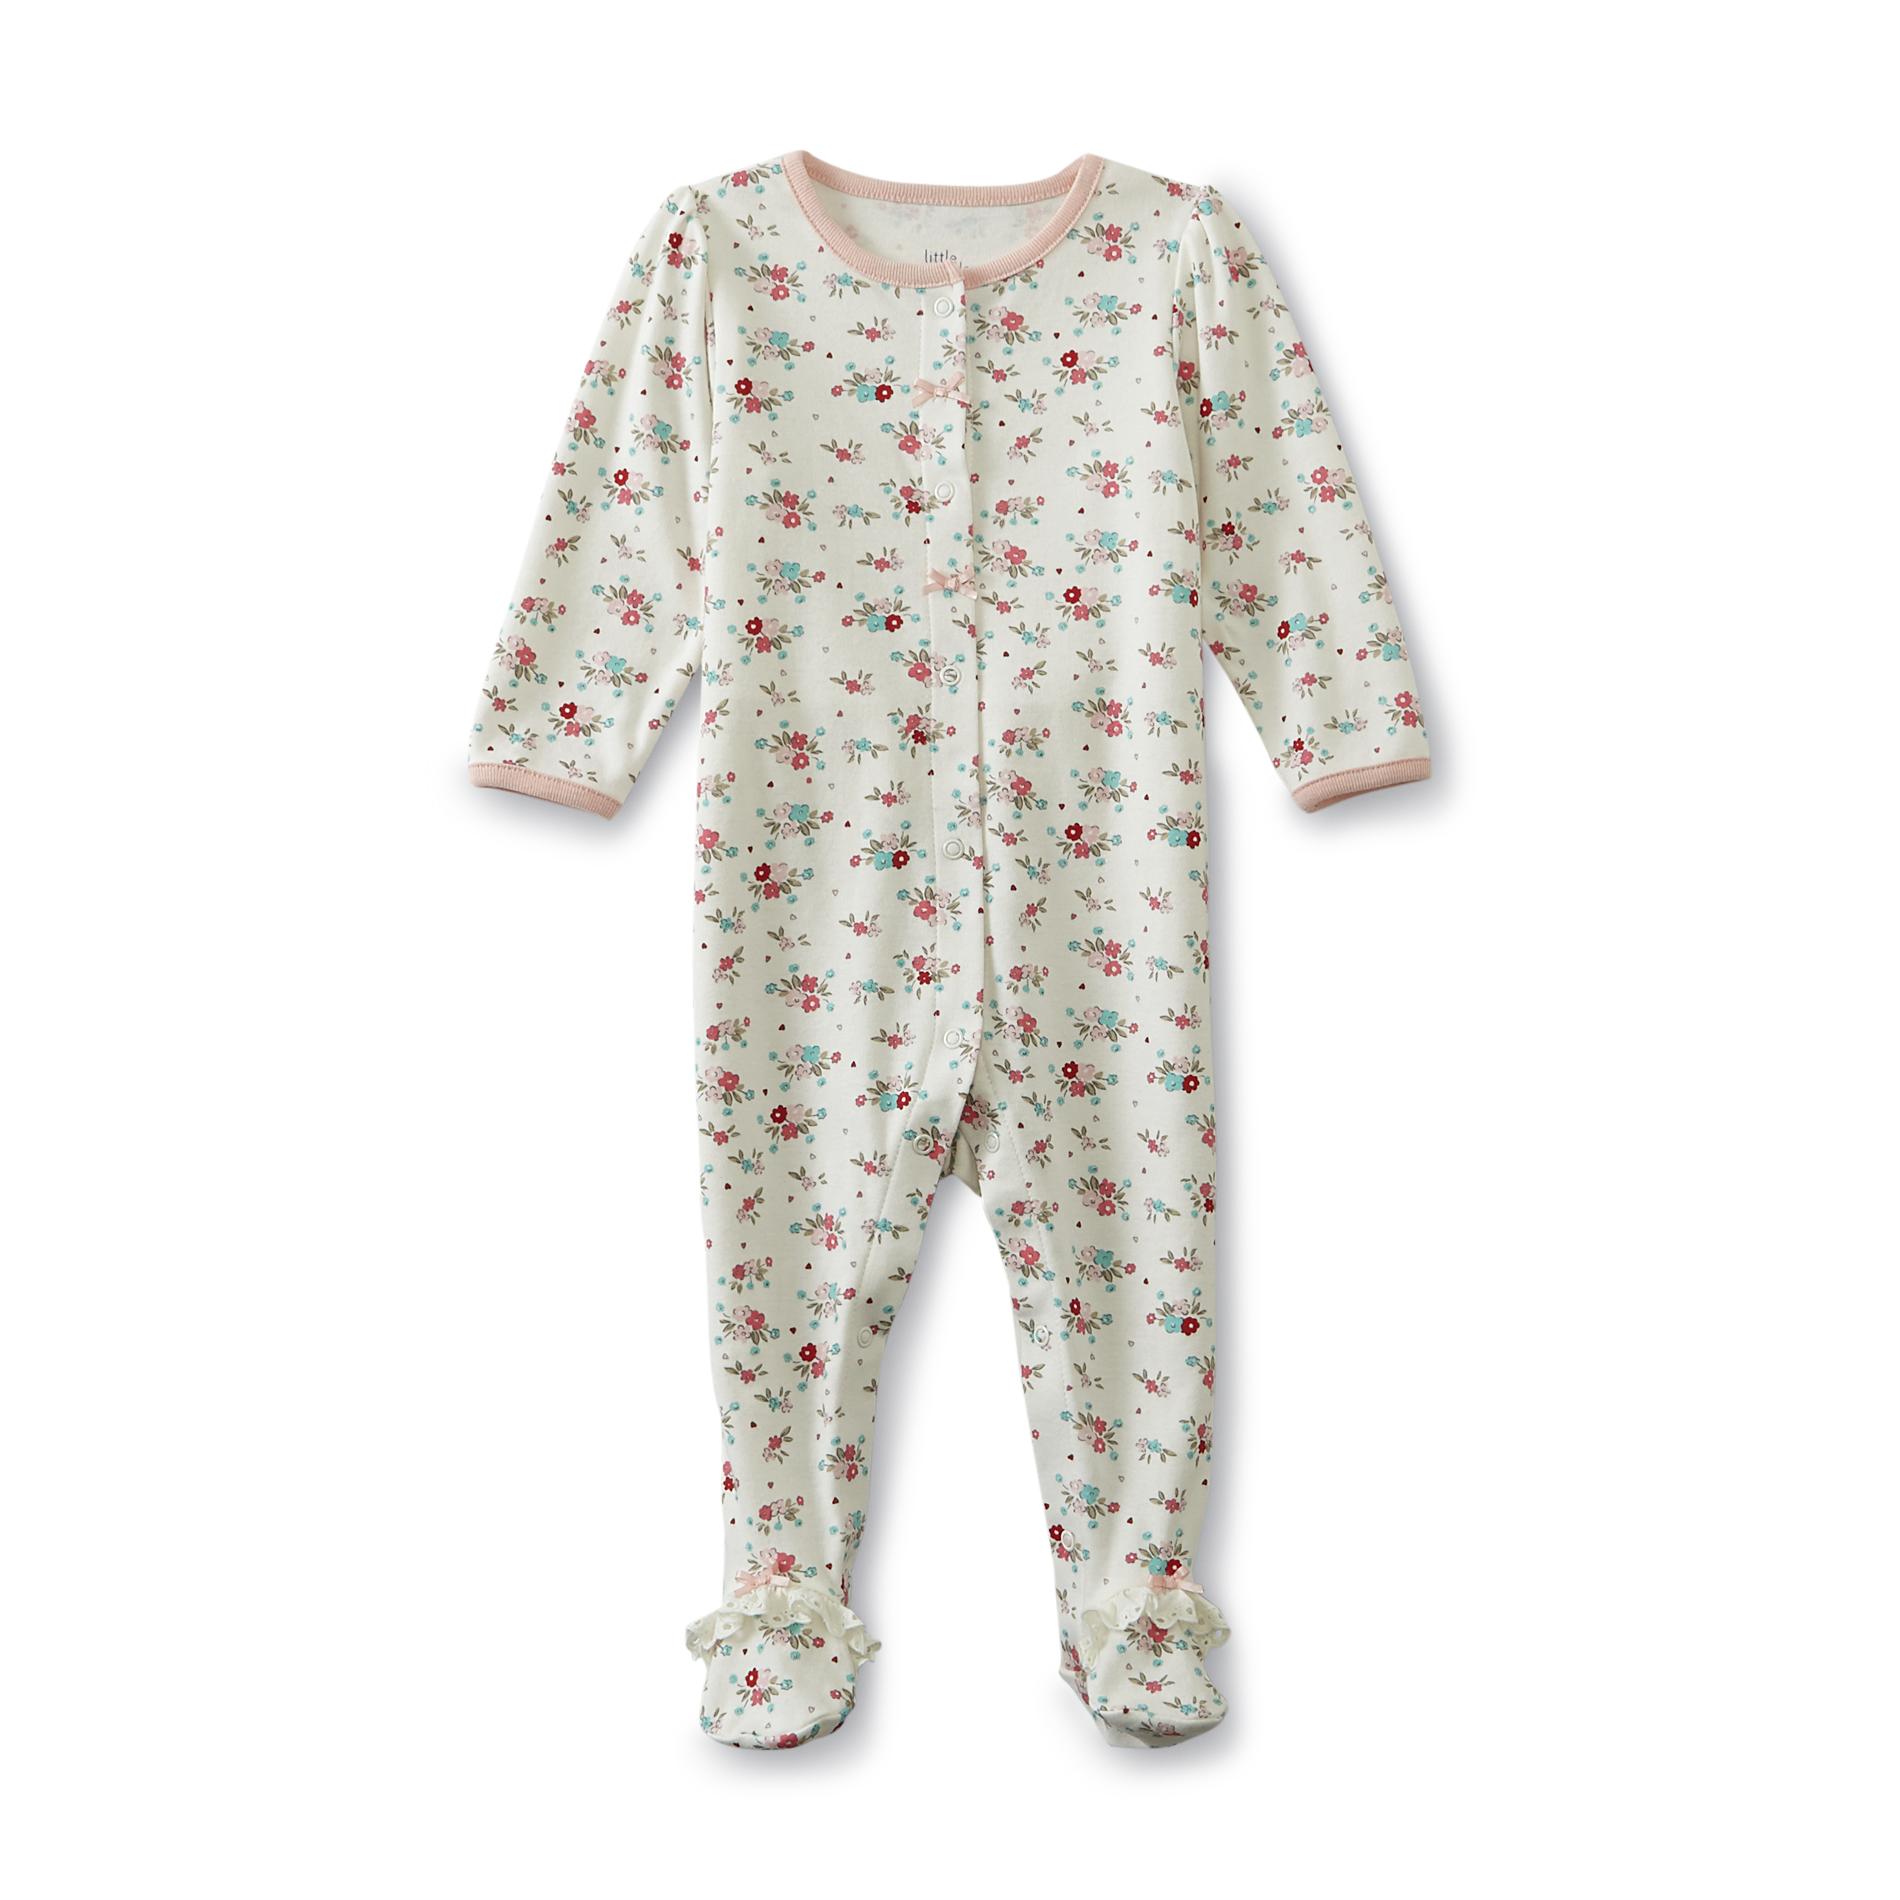 Little Wonders Newborn Girl's Sleeper Pajamas - Floral